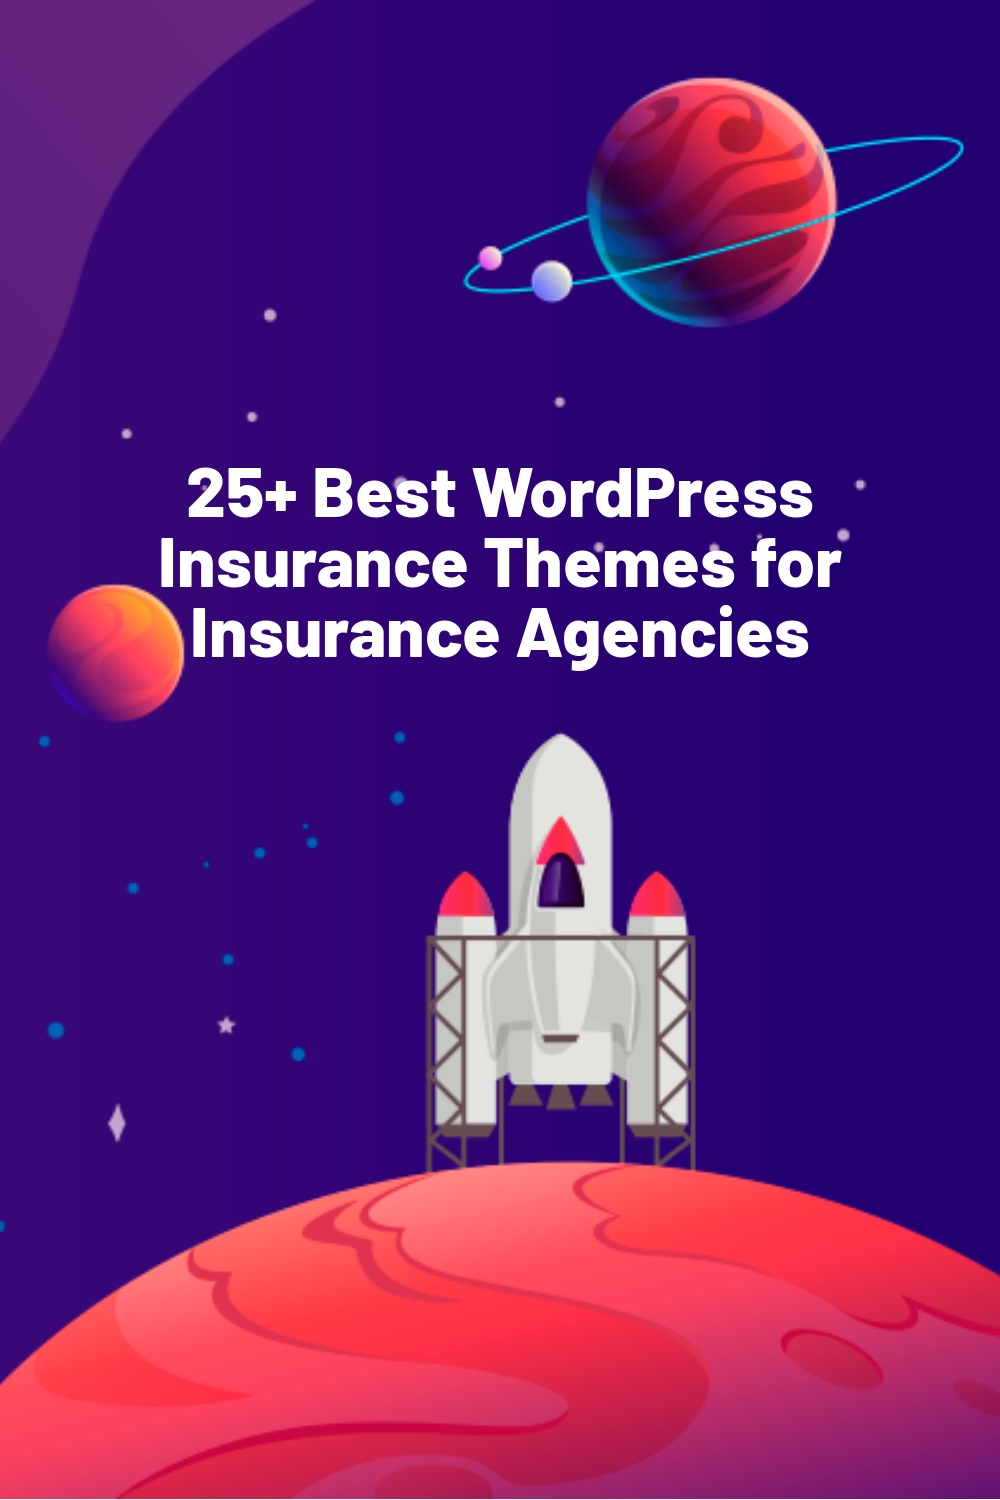 25+ Best WordPress Insurance Themes for Insurance Agencies